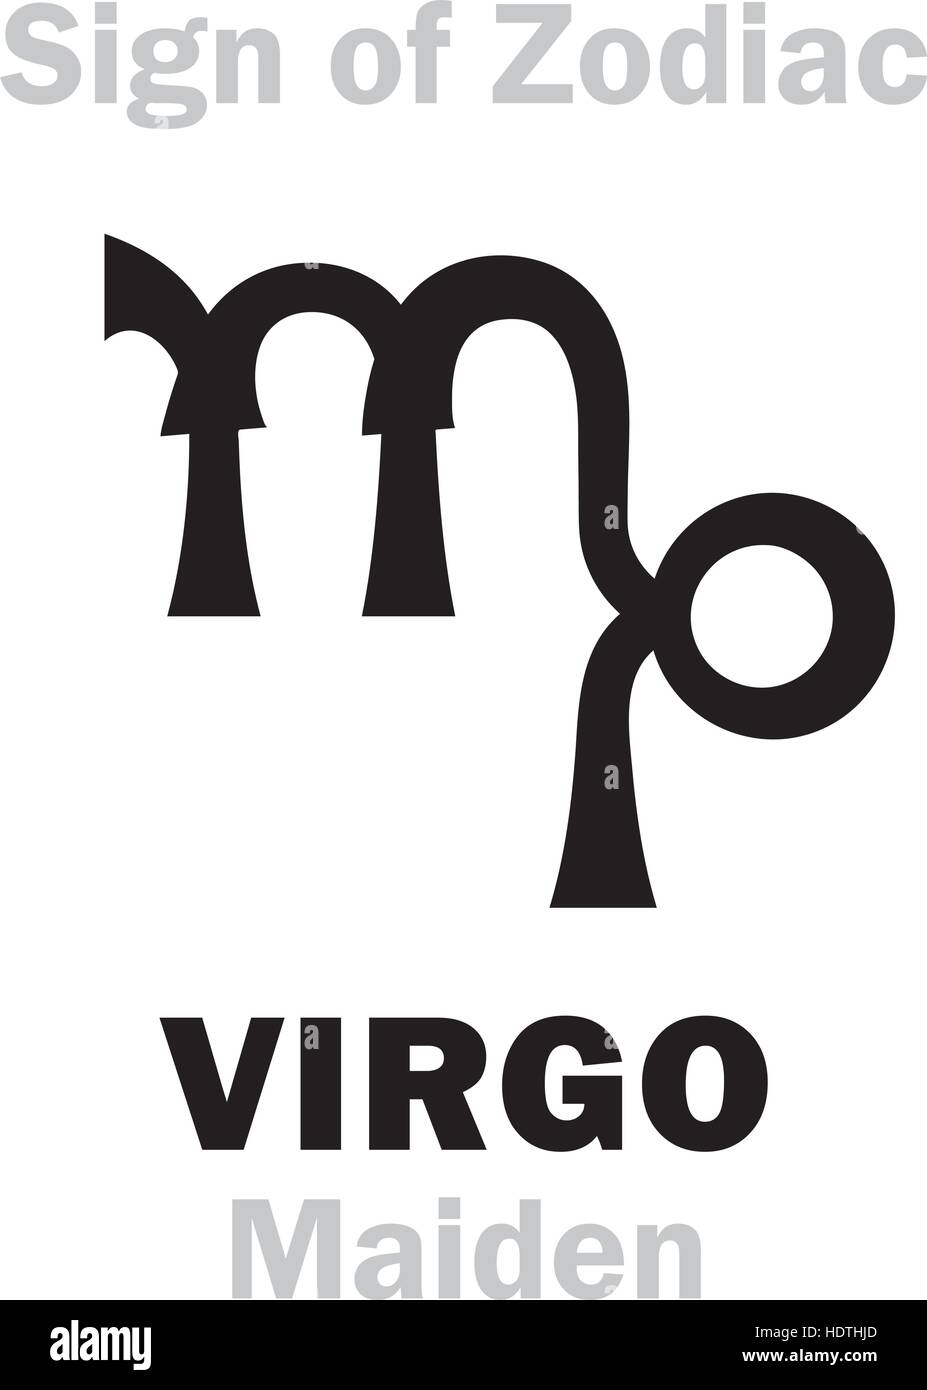 Astrology Alphabet: Sign of Zodiac VIRGO (The Maiden). Hieroglyphics character sign (single symbol). Stock Vector